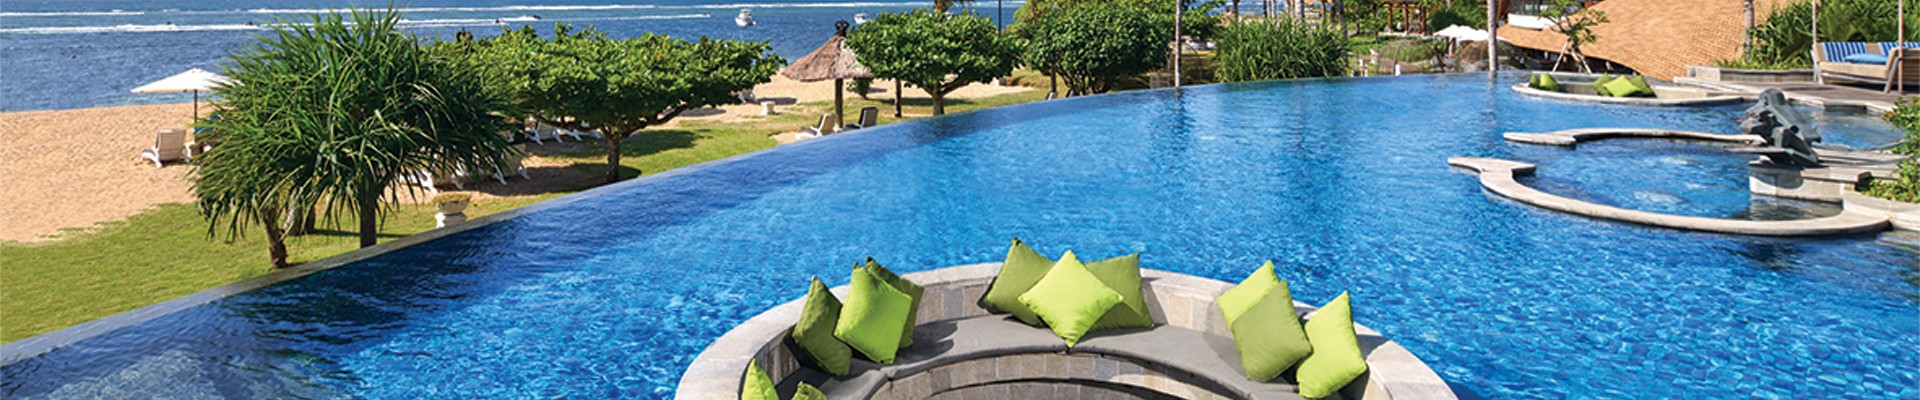 5* Grand Mirage Resort - Bali Package (7 nights)